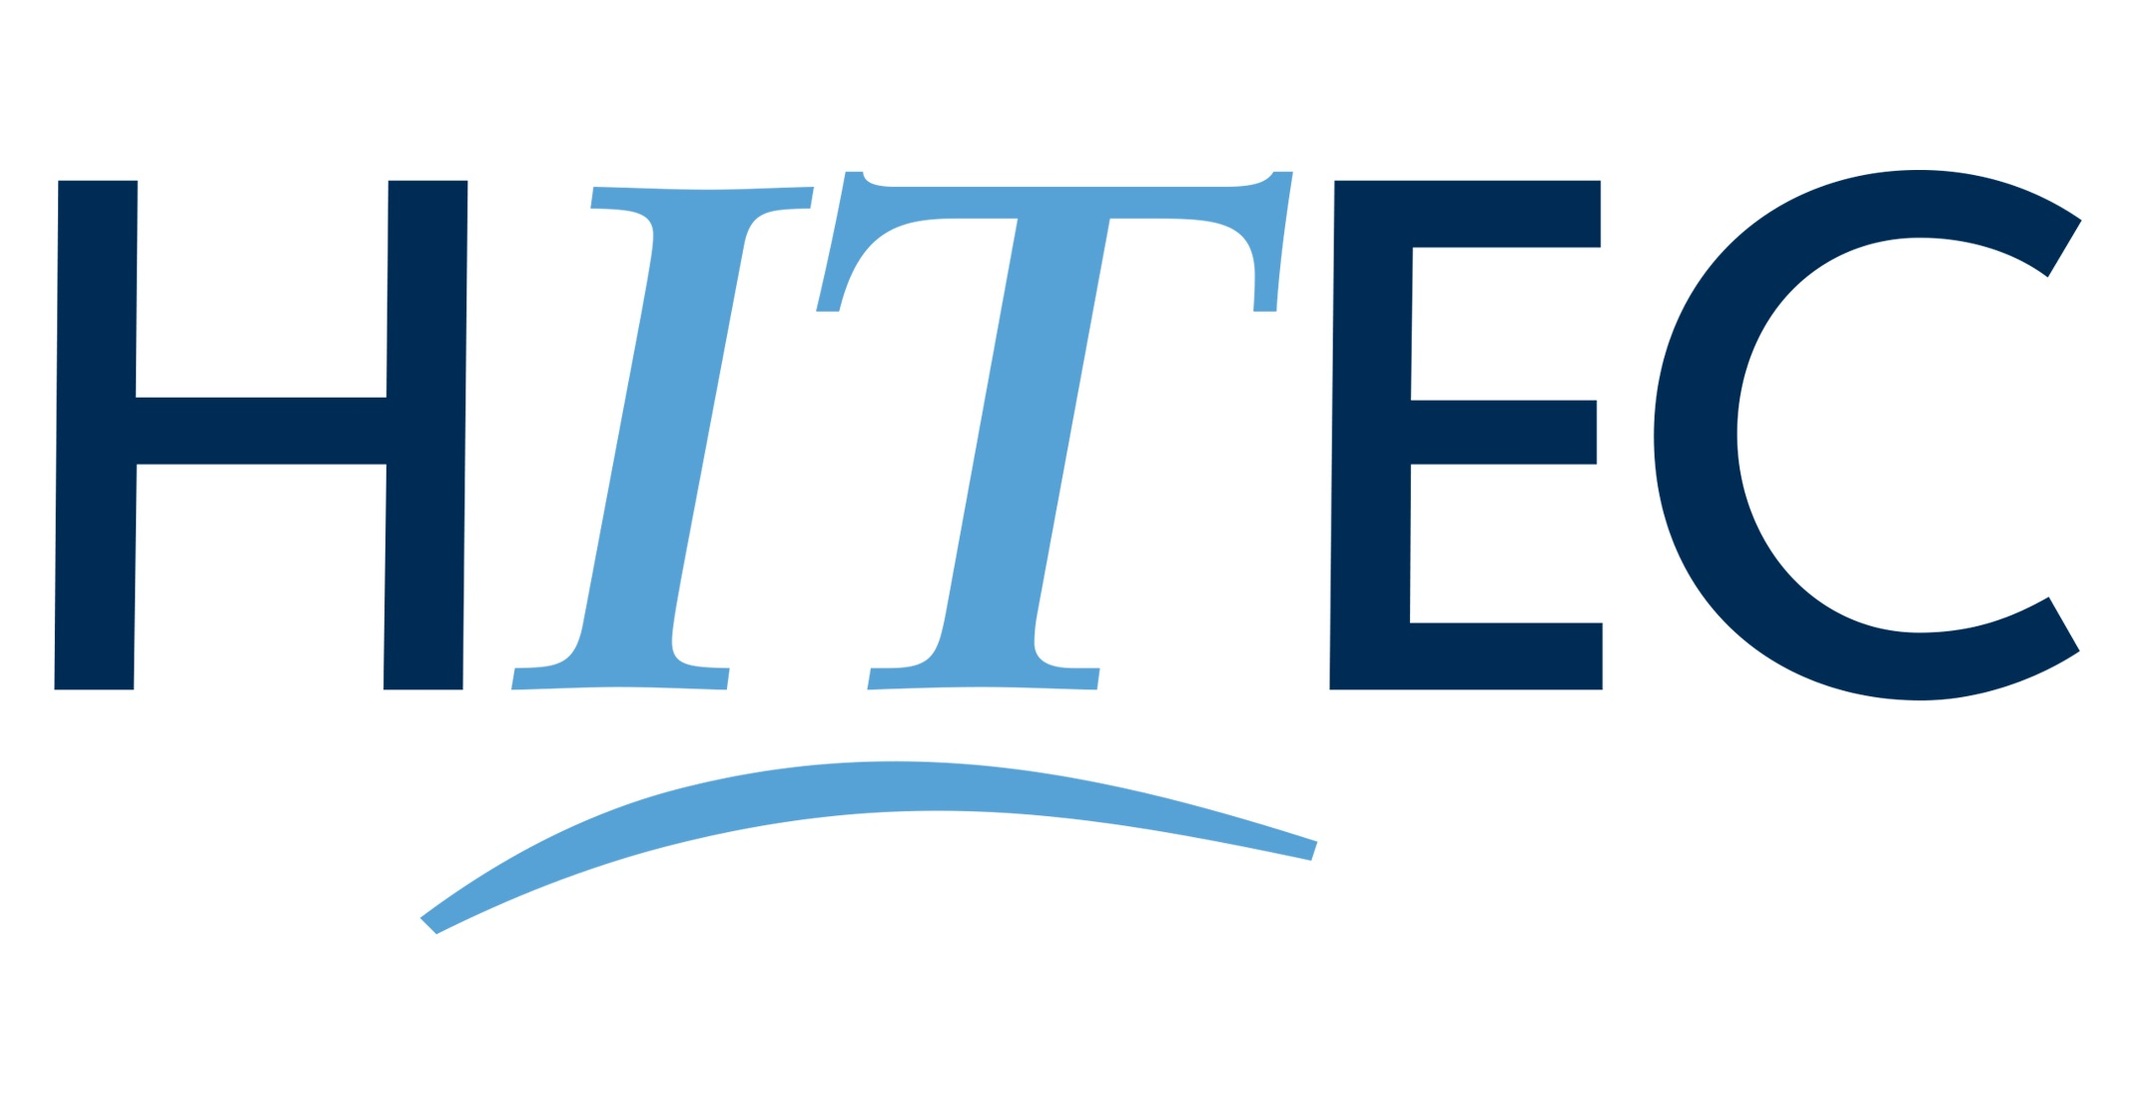 Hitec logo